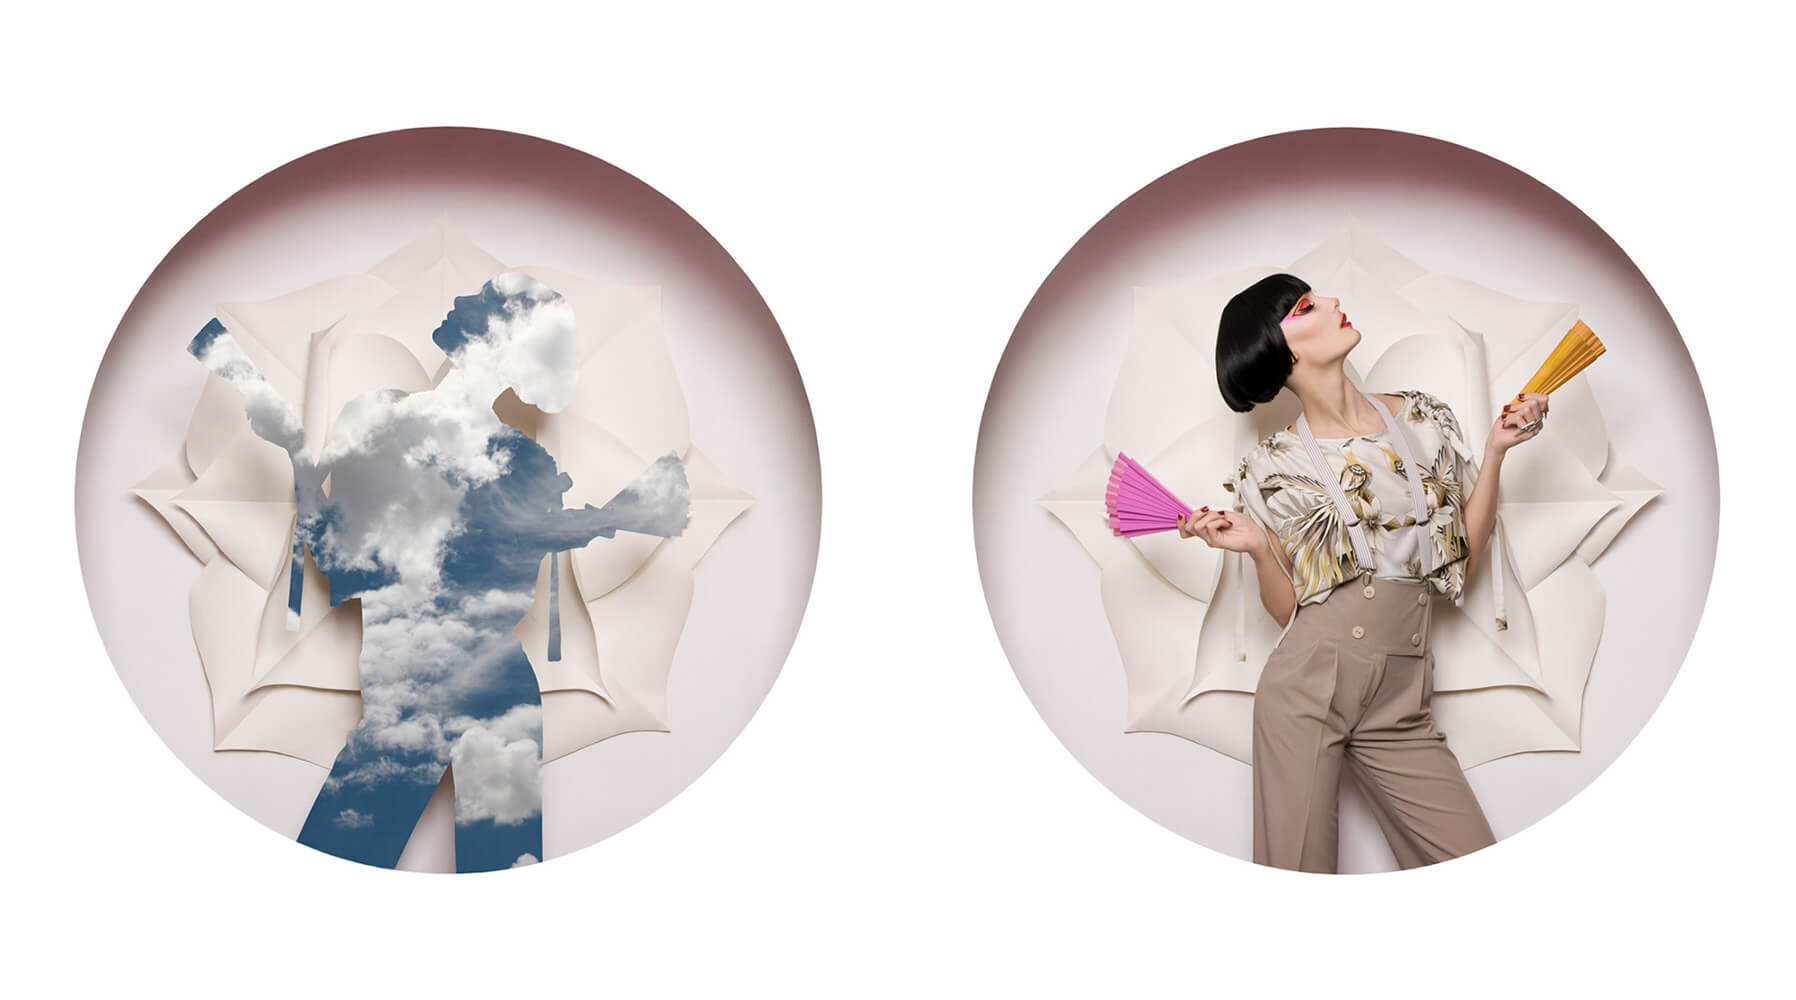 Angel-Ruiz-Ruiz-Fashion-Photographer-Campaign-SS-2014-Divina-Providencia-Madrid-Japan-Clouds-Magritte-1796x1000